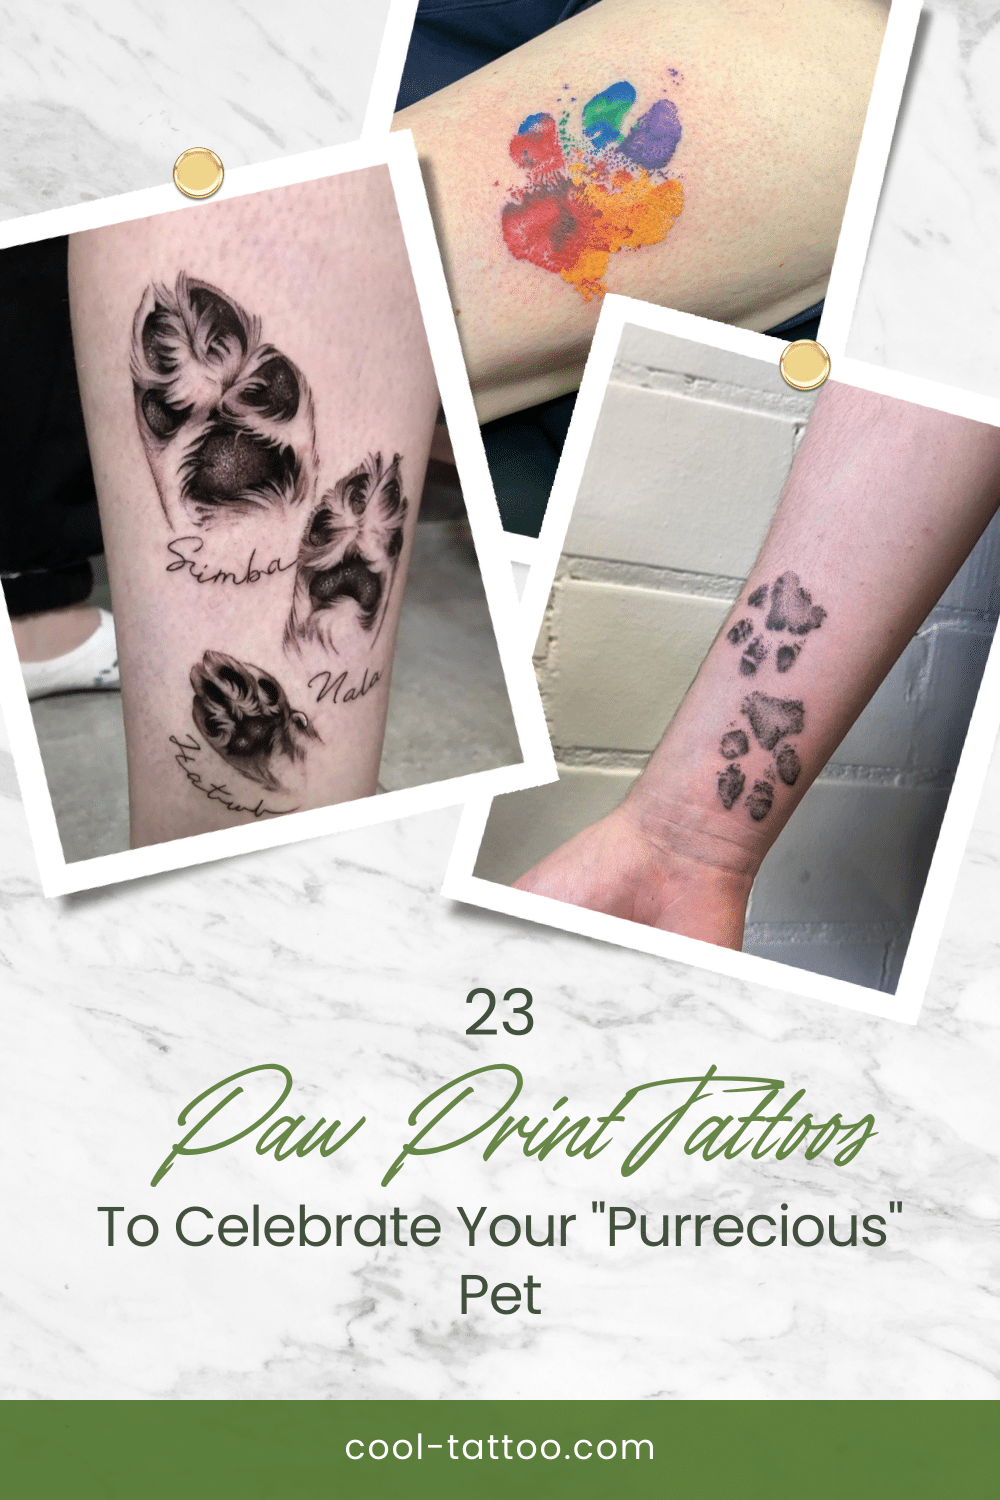 23 Paw Print Tattoos To Celebrate Your "Purrecious" Pet